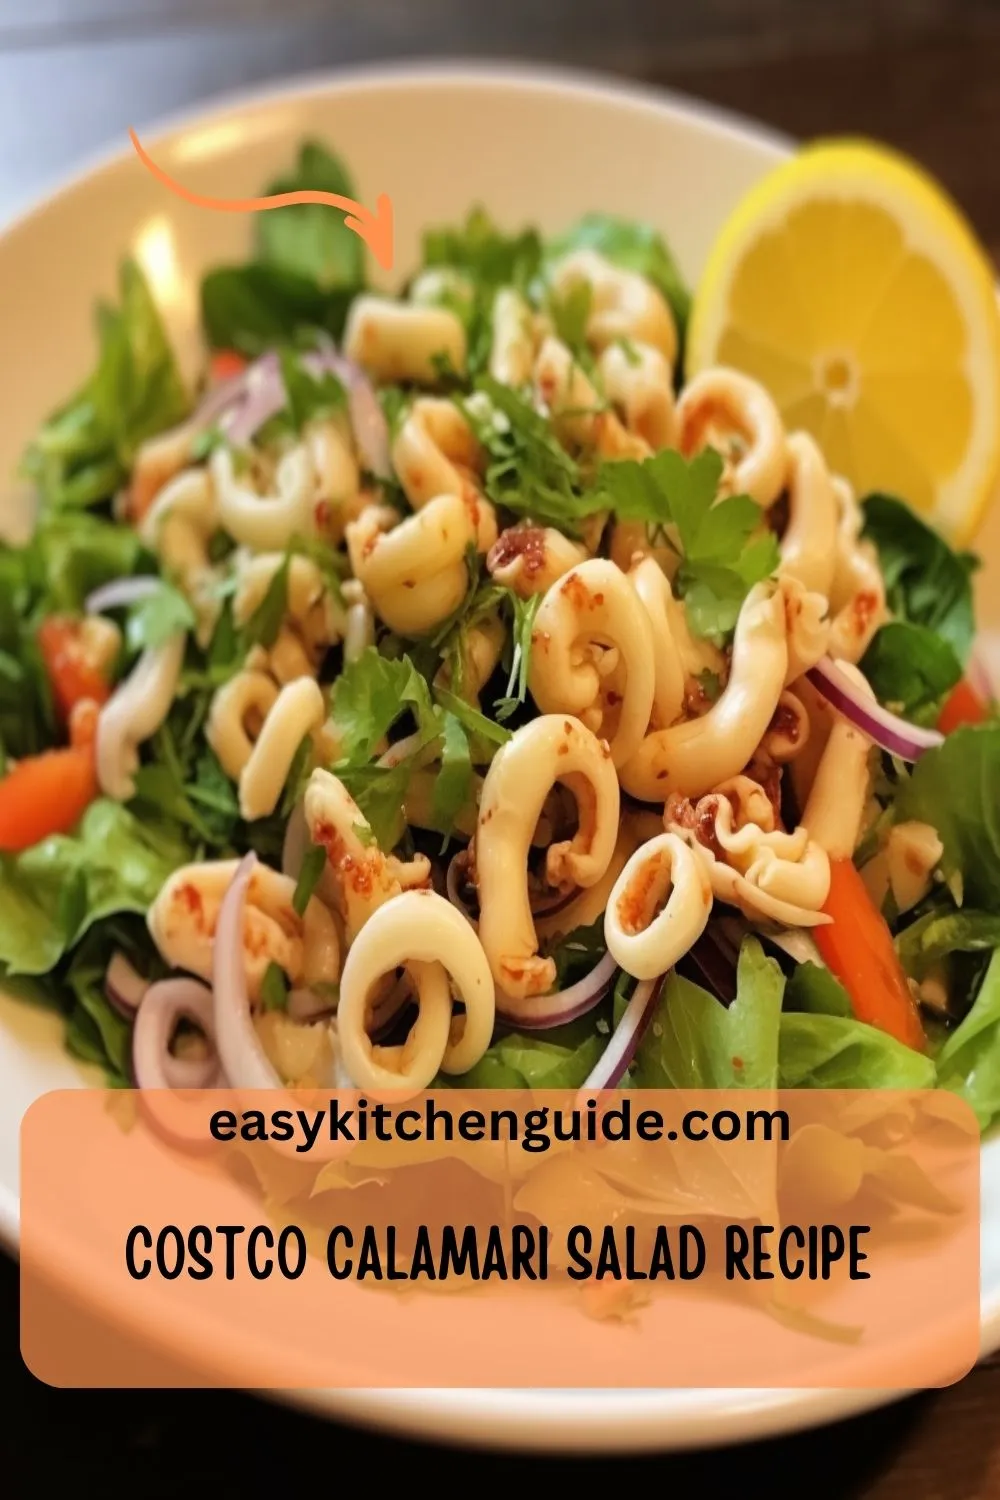 Costco Calamari Salad Recipe